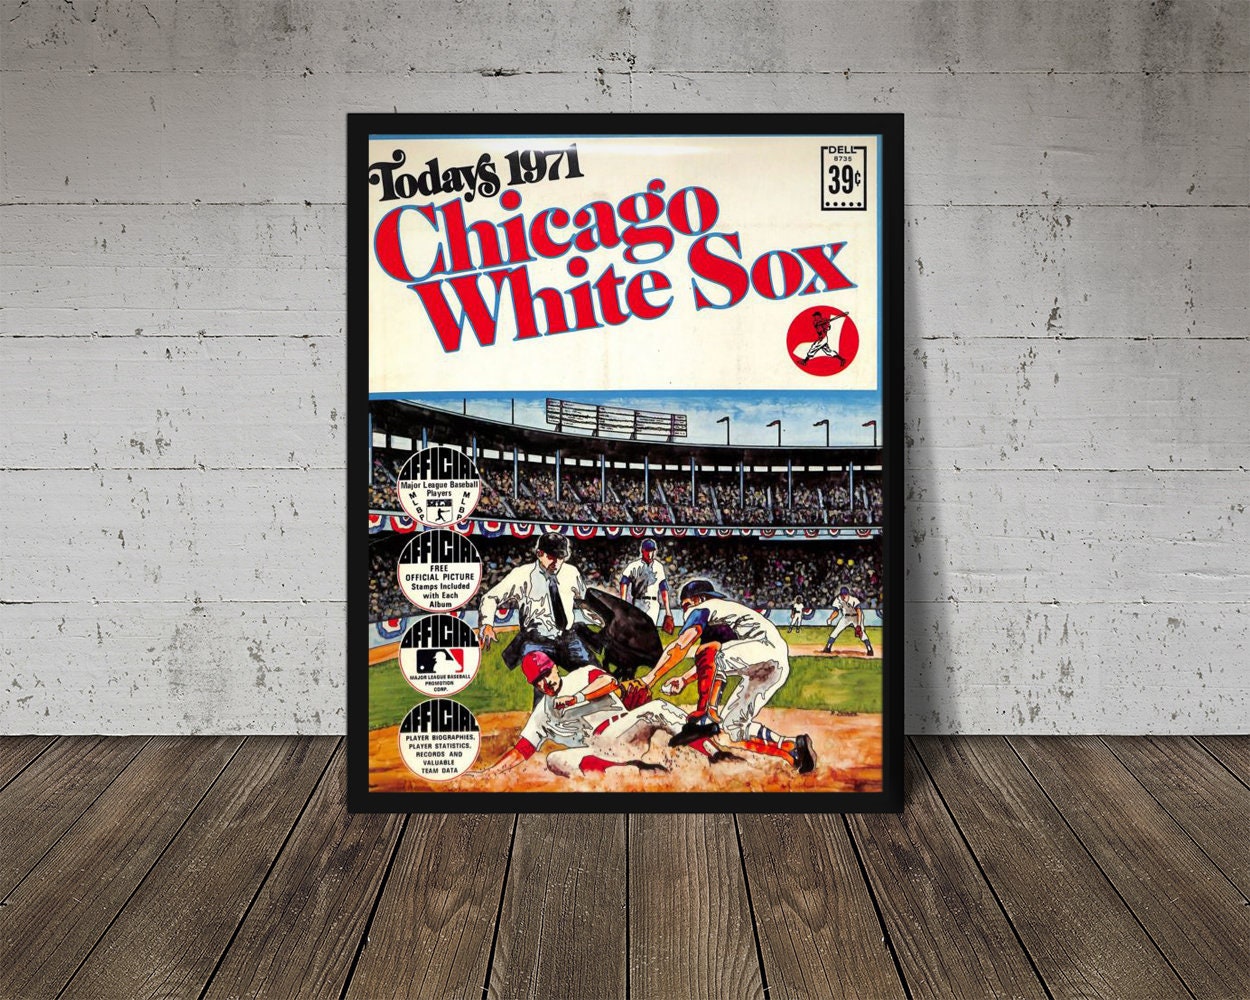 1971 CHICAGO WHITE SOX Print Vintage Baseball Poster Retro 